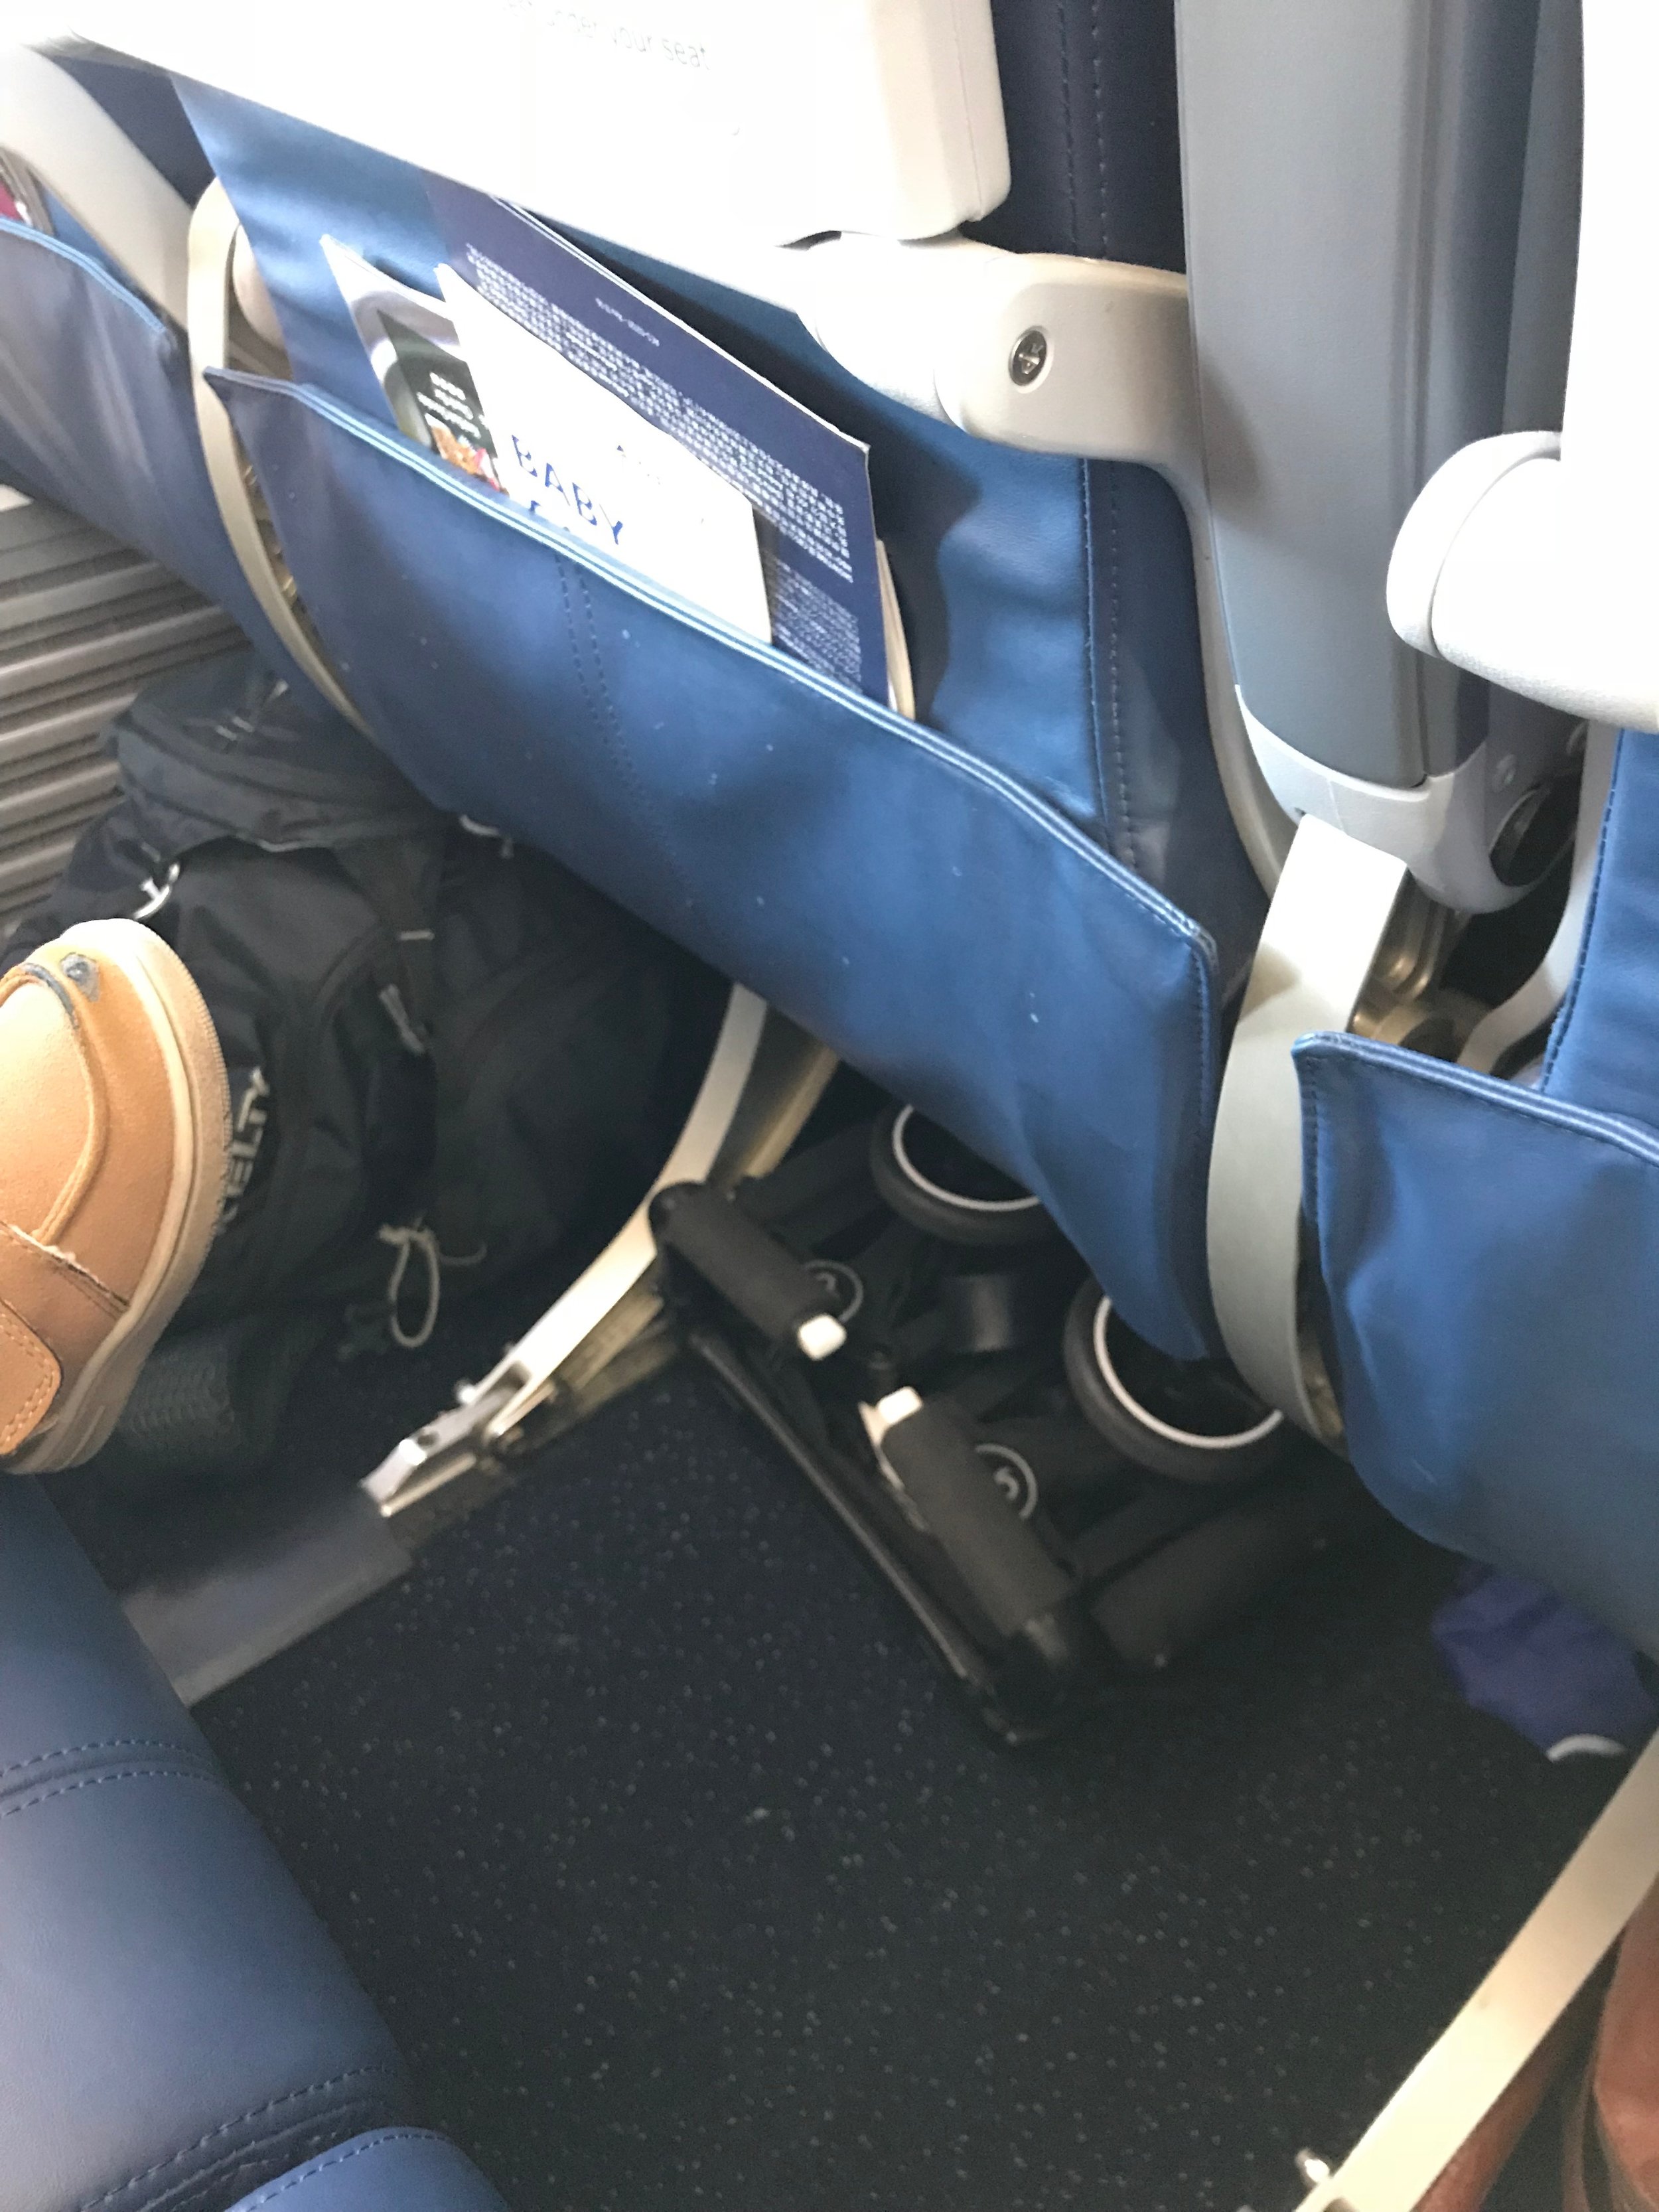 bringing a stroller on a plane